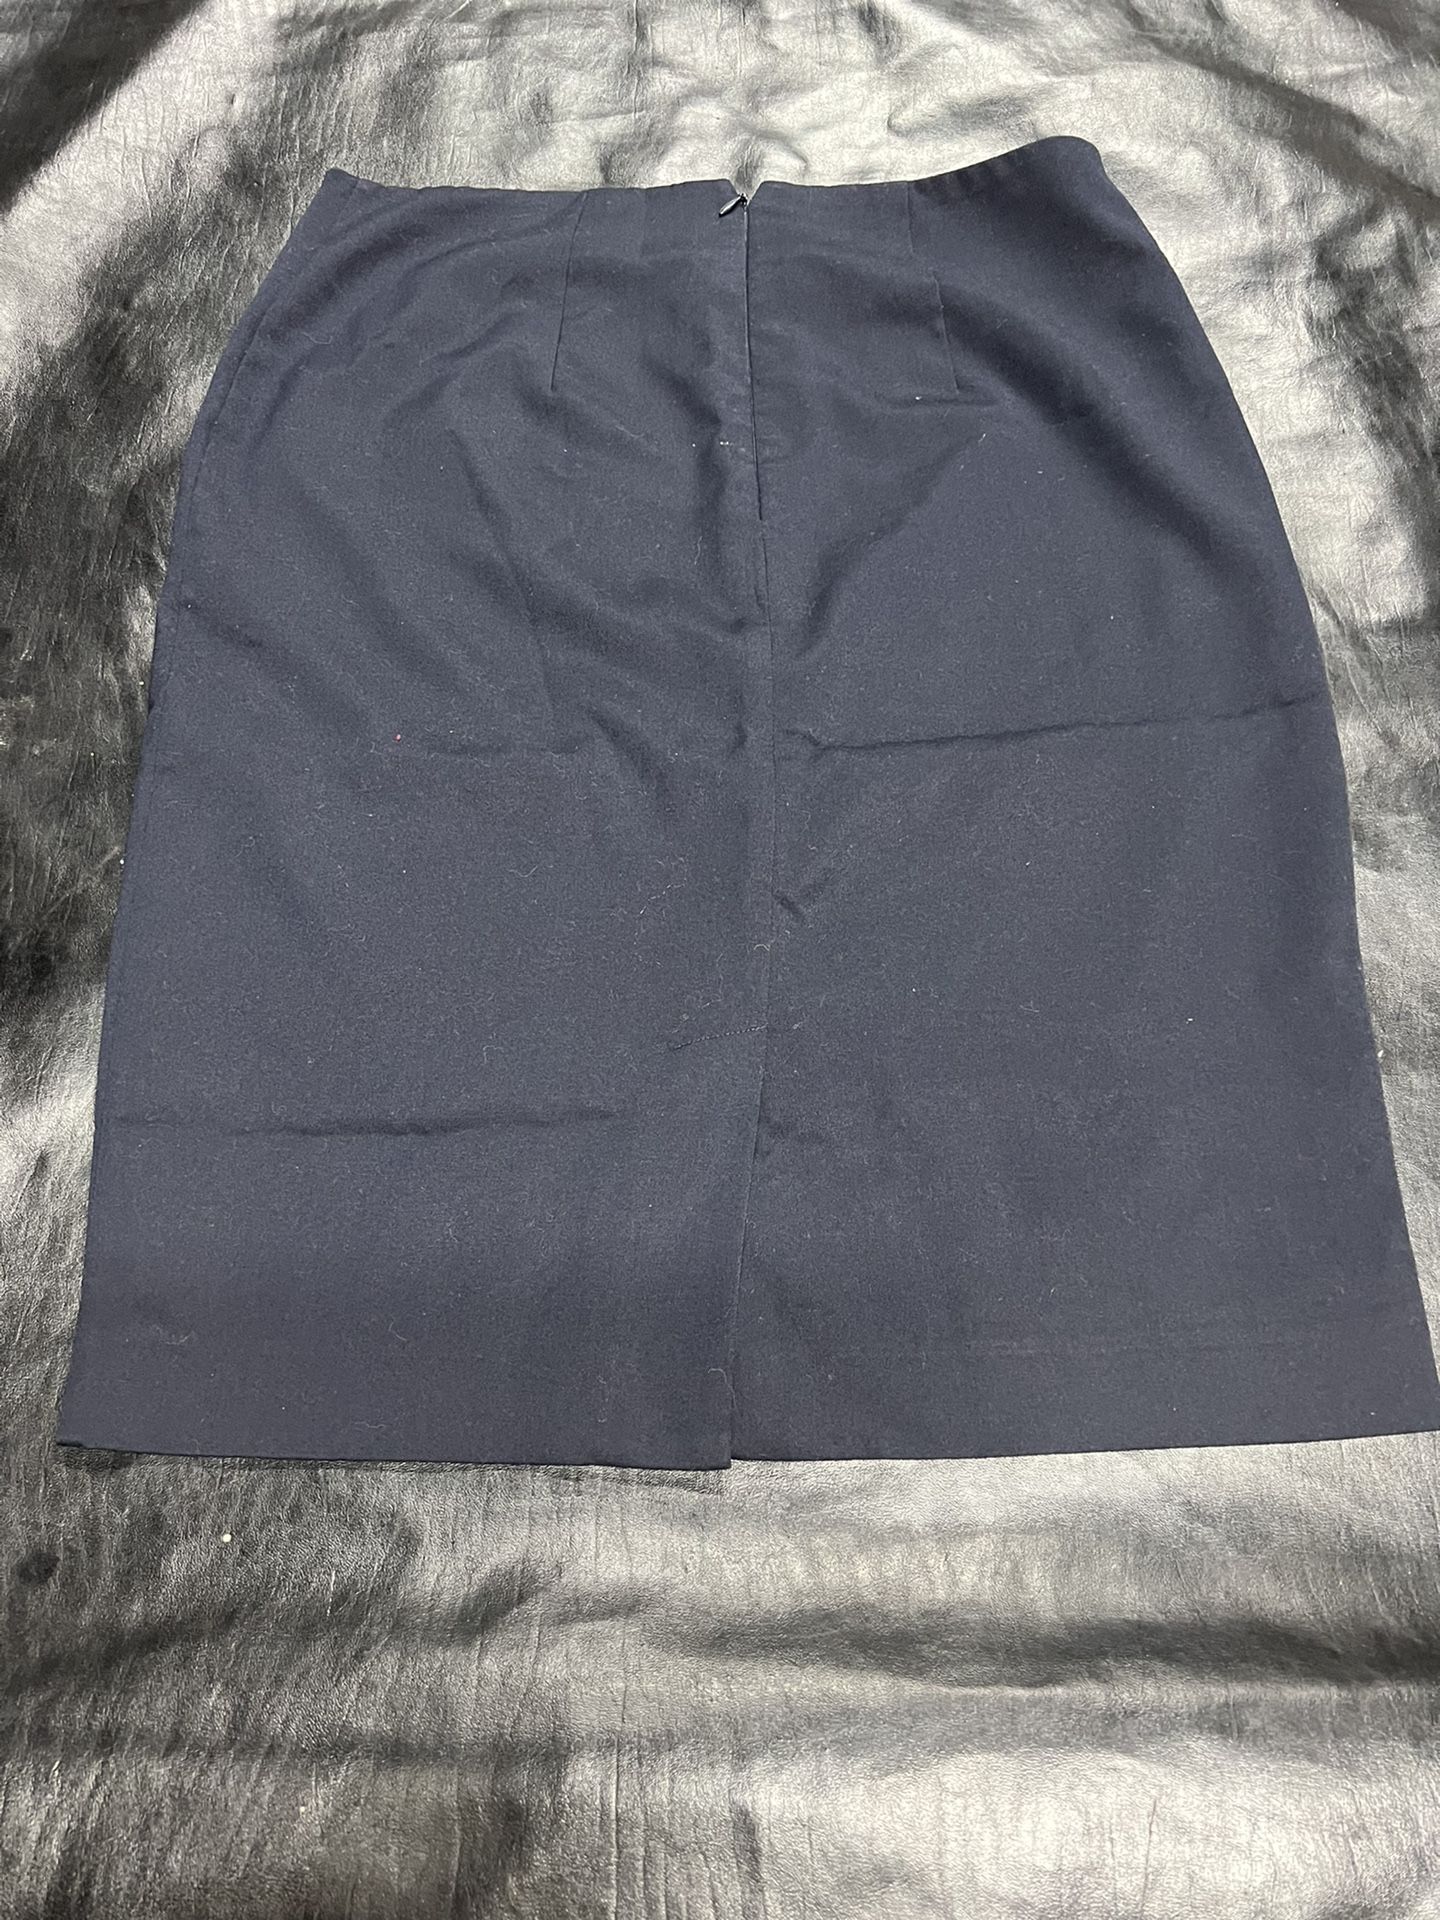 Merona Navy Blue Pencil Skirt